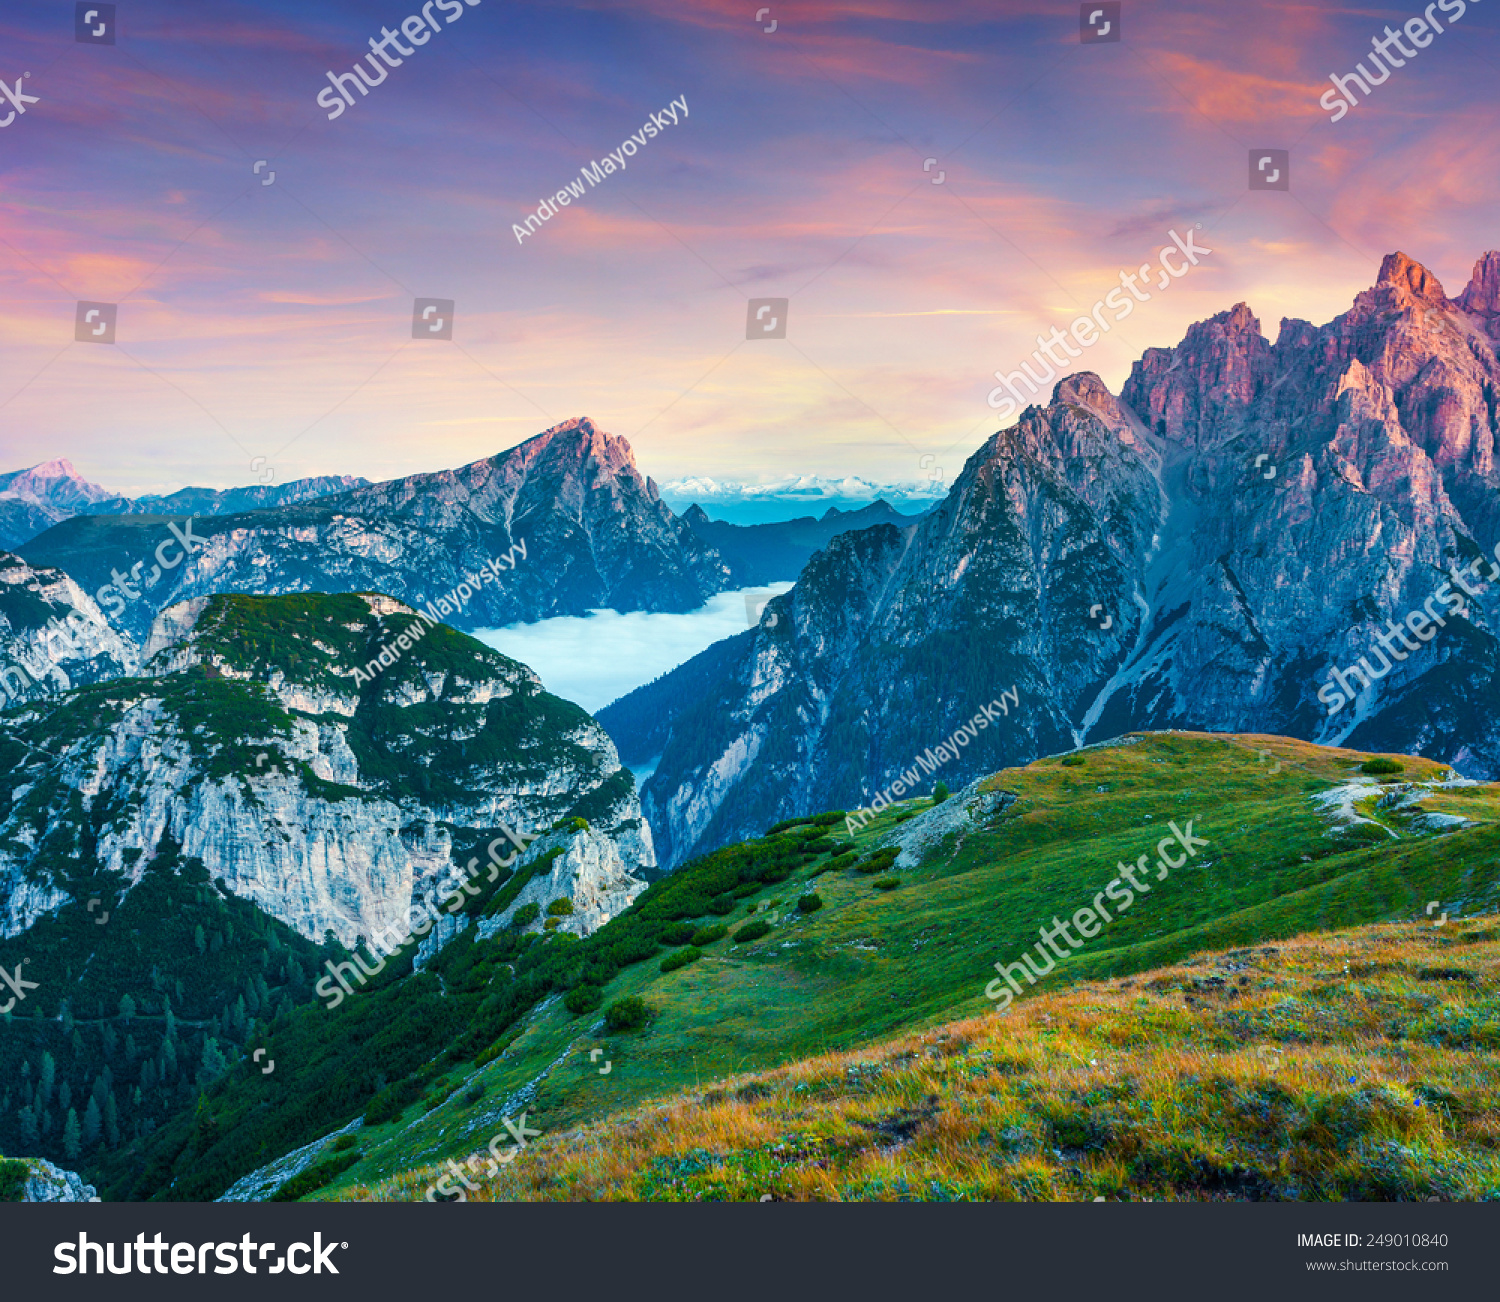 Colorful sunrise on the Seekofel mountain range in National Park Tre Cime di Lavaredo. Dolomites, South Tyrol. Location Auronzo, Italy, Europe. #249010840